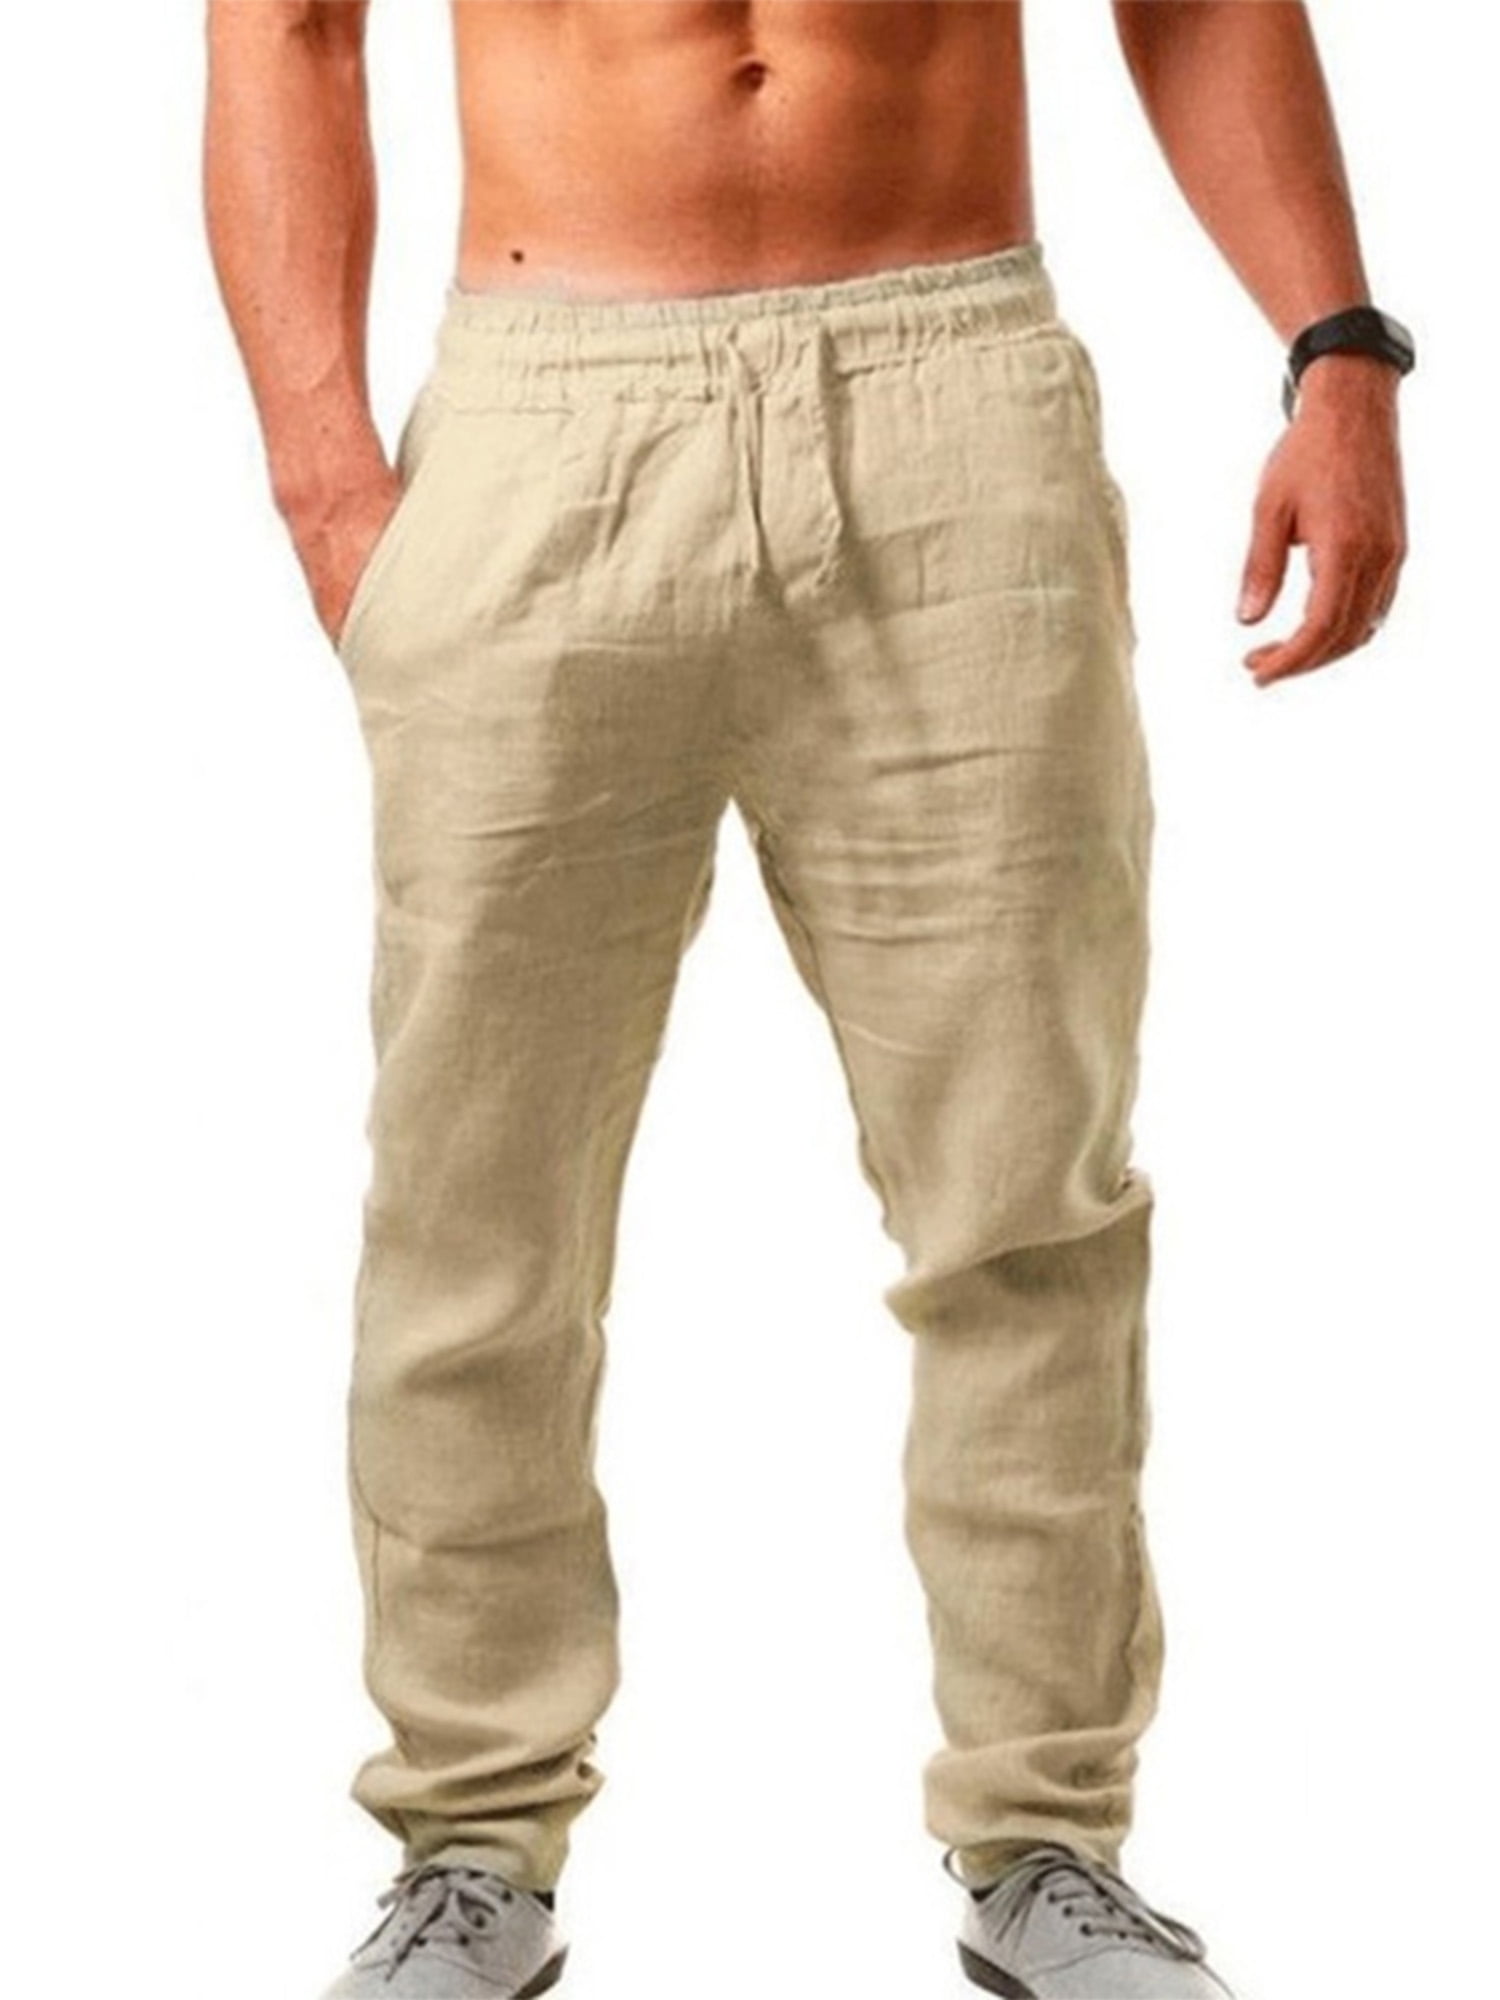 Andopa Men Jogger Causal Baggy Drawstring Linen Ethinic Style Pants